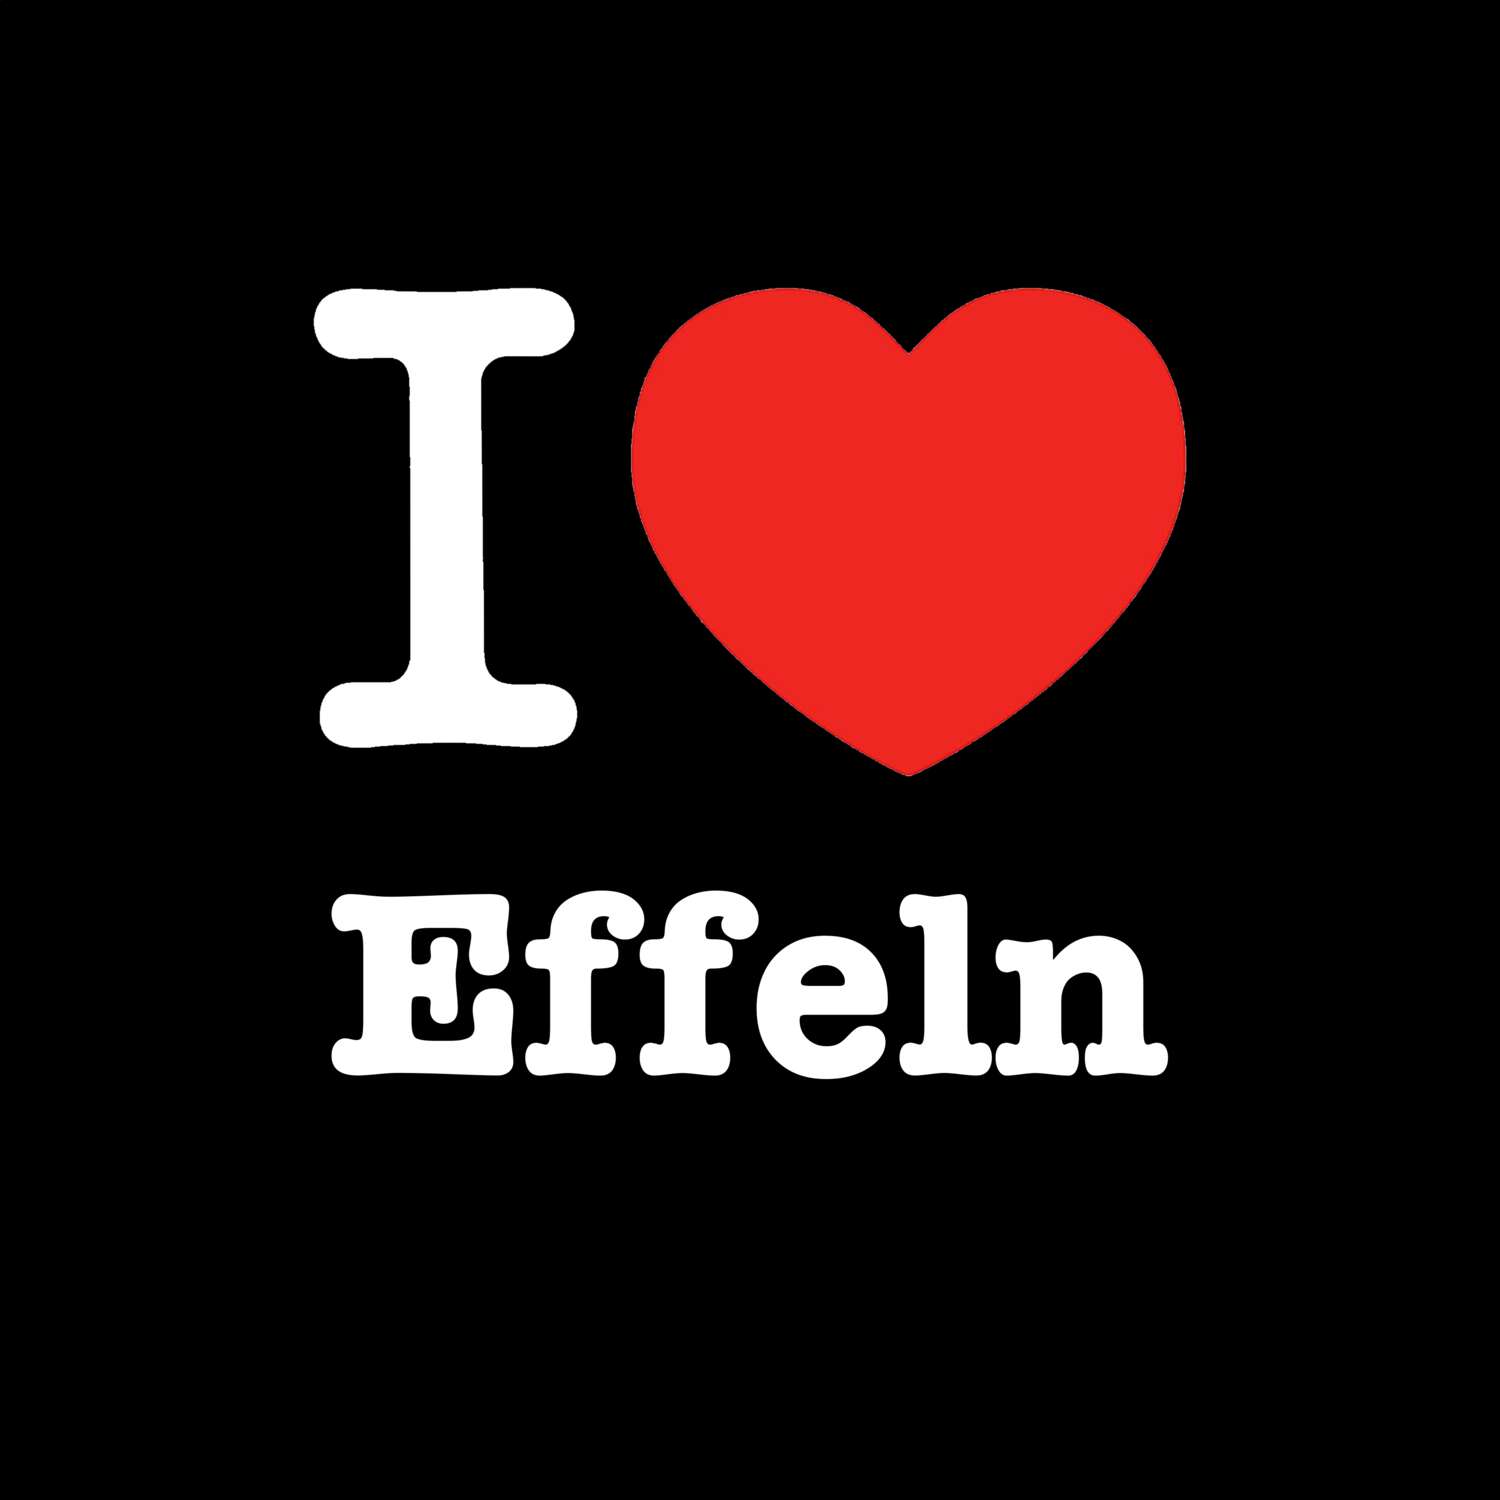 Effeln T-Shirt »I love«